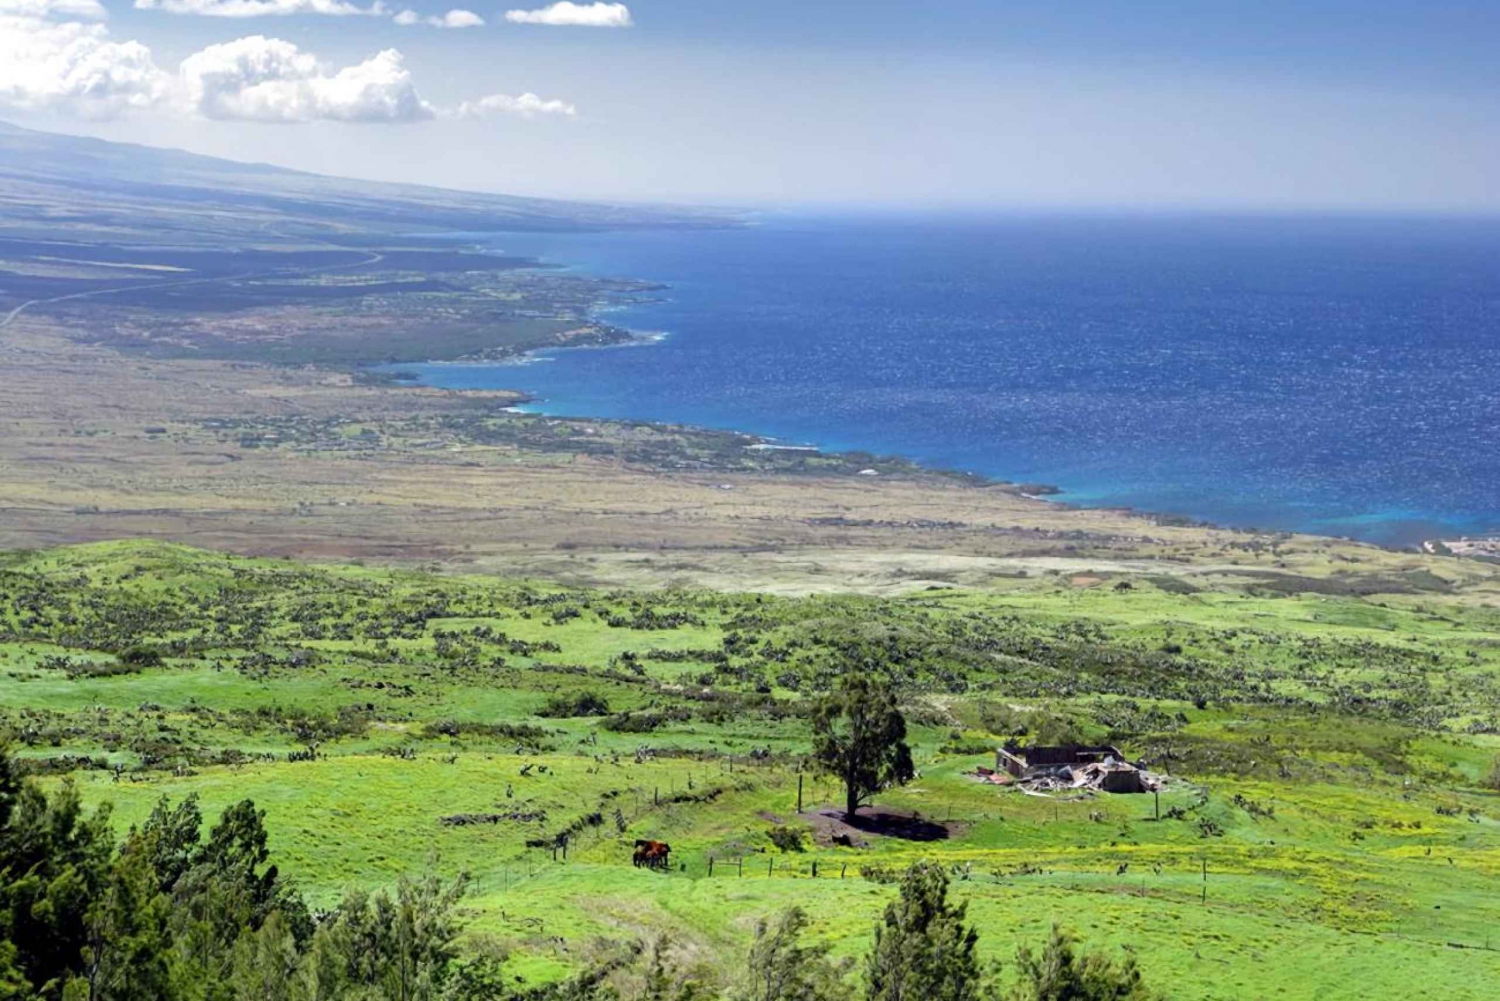 Explore the Big Island of Hawaii in a Polaris Slingshot